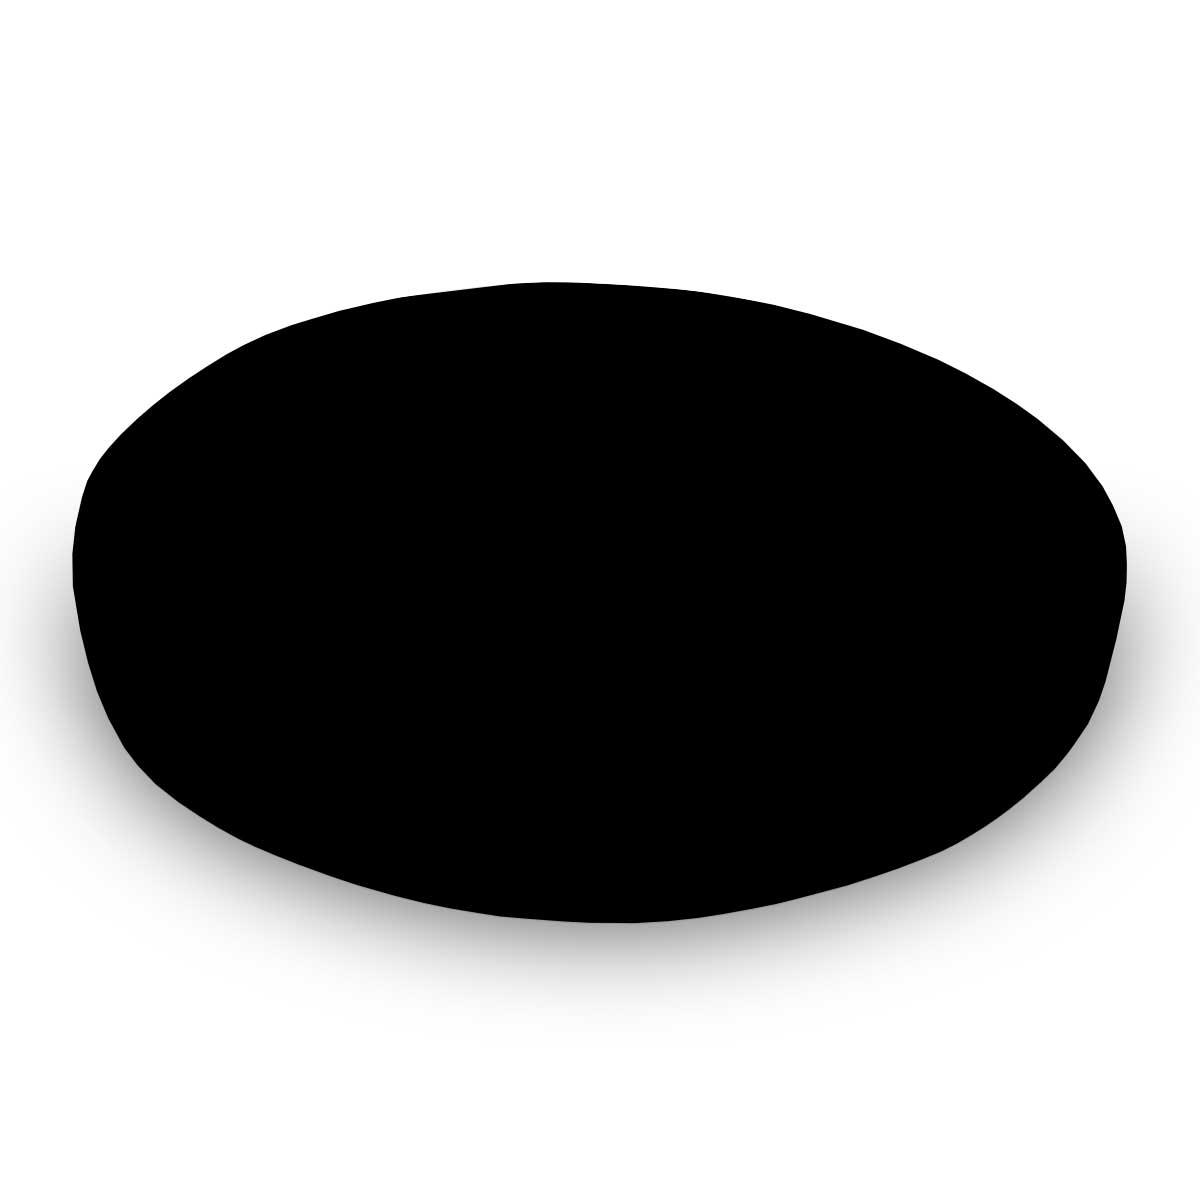 Oval Crib (Stokke Sleepi) - Flannel - Black - Fitted  Oval